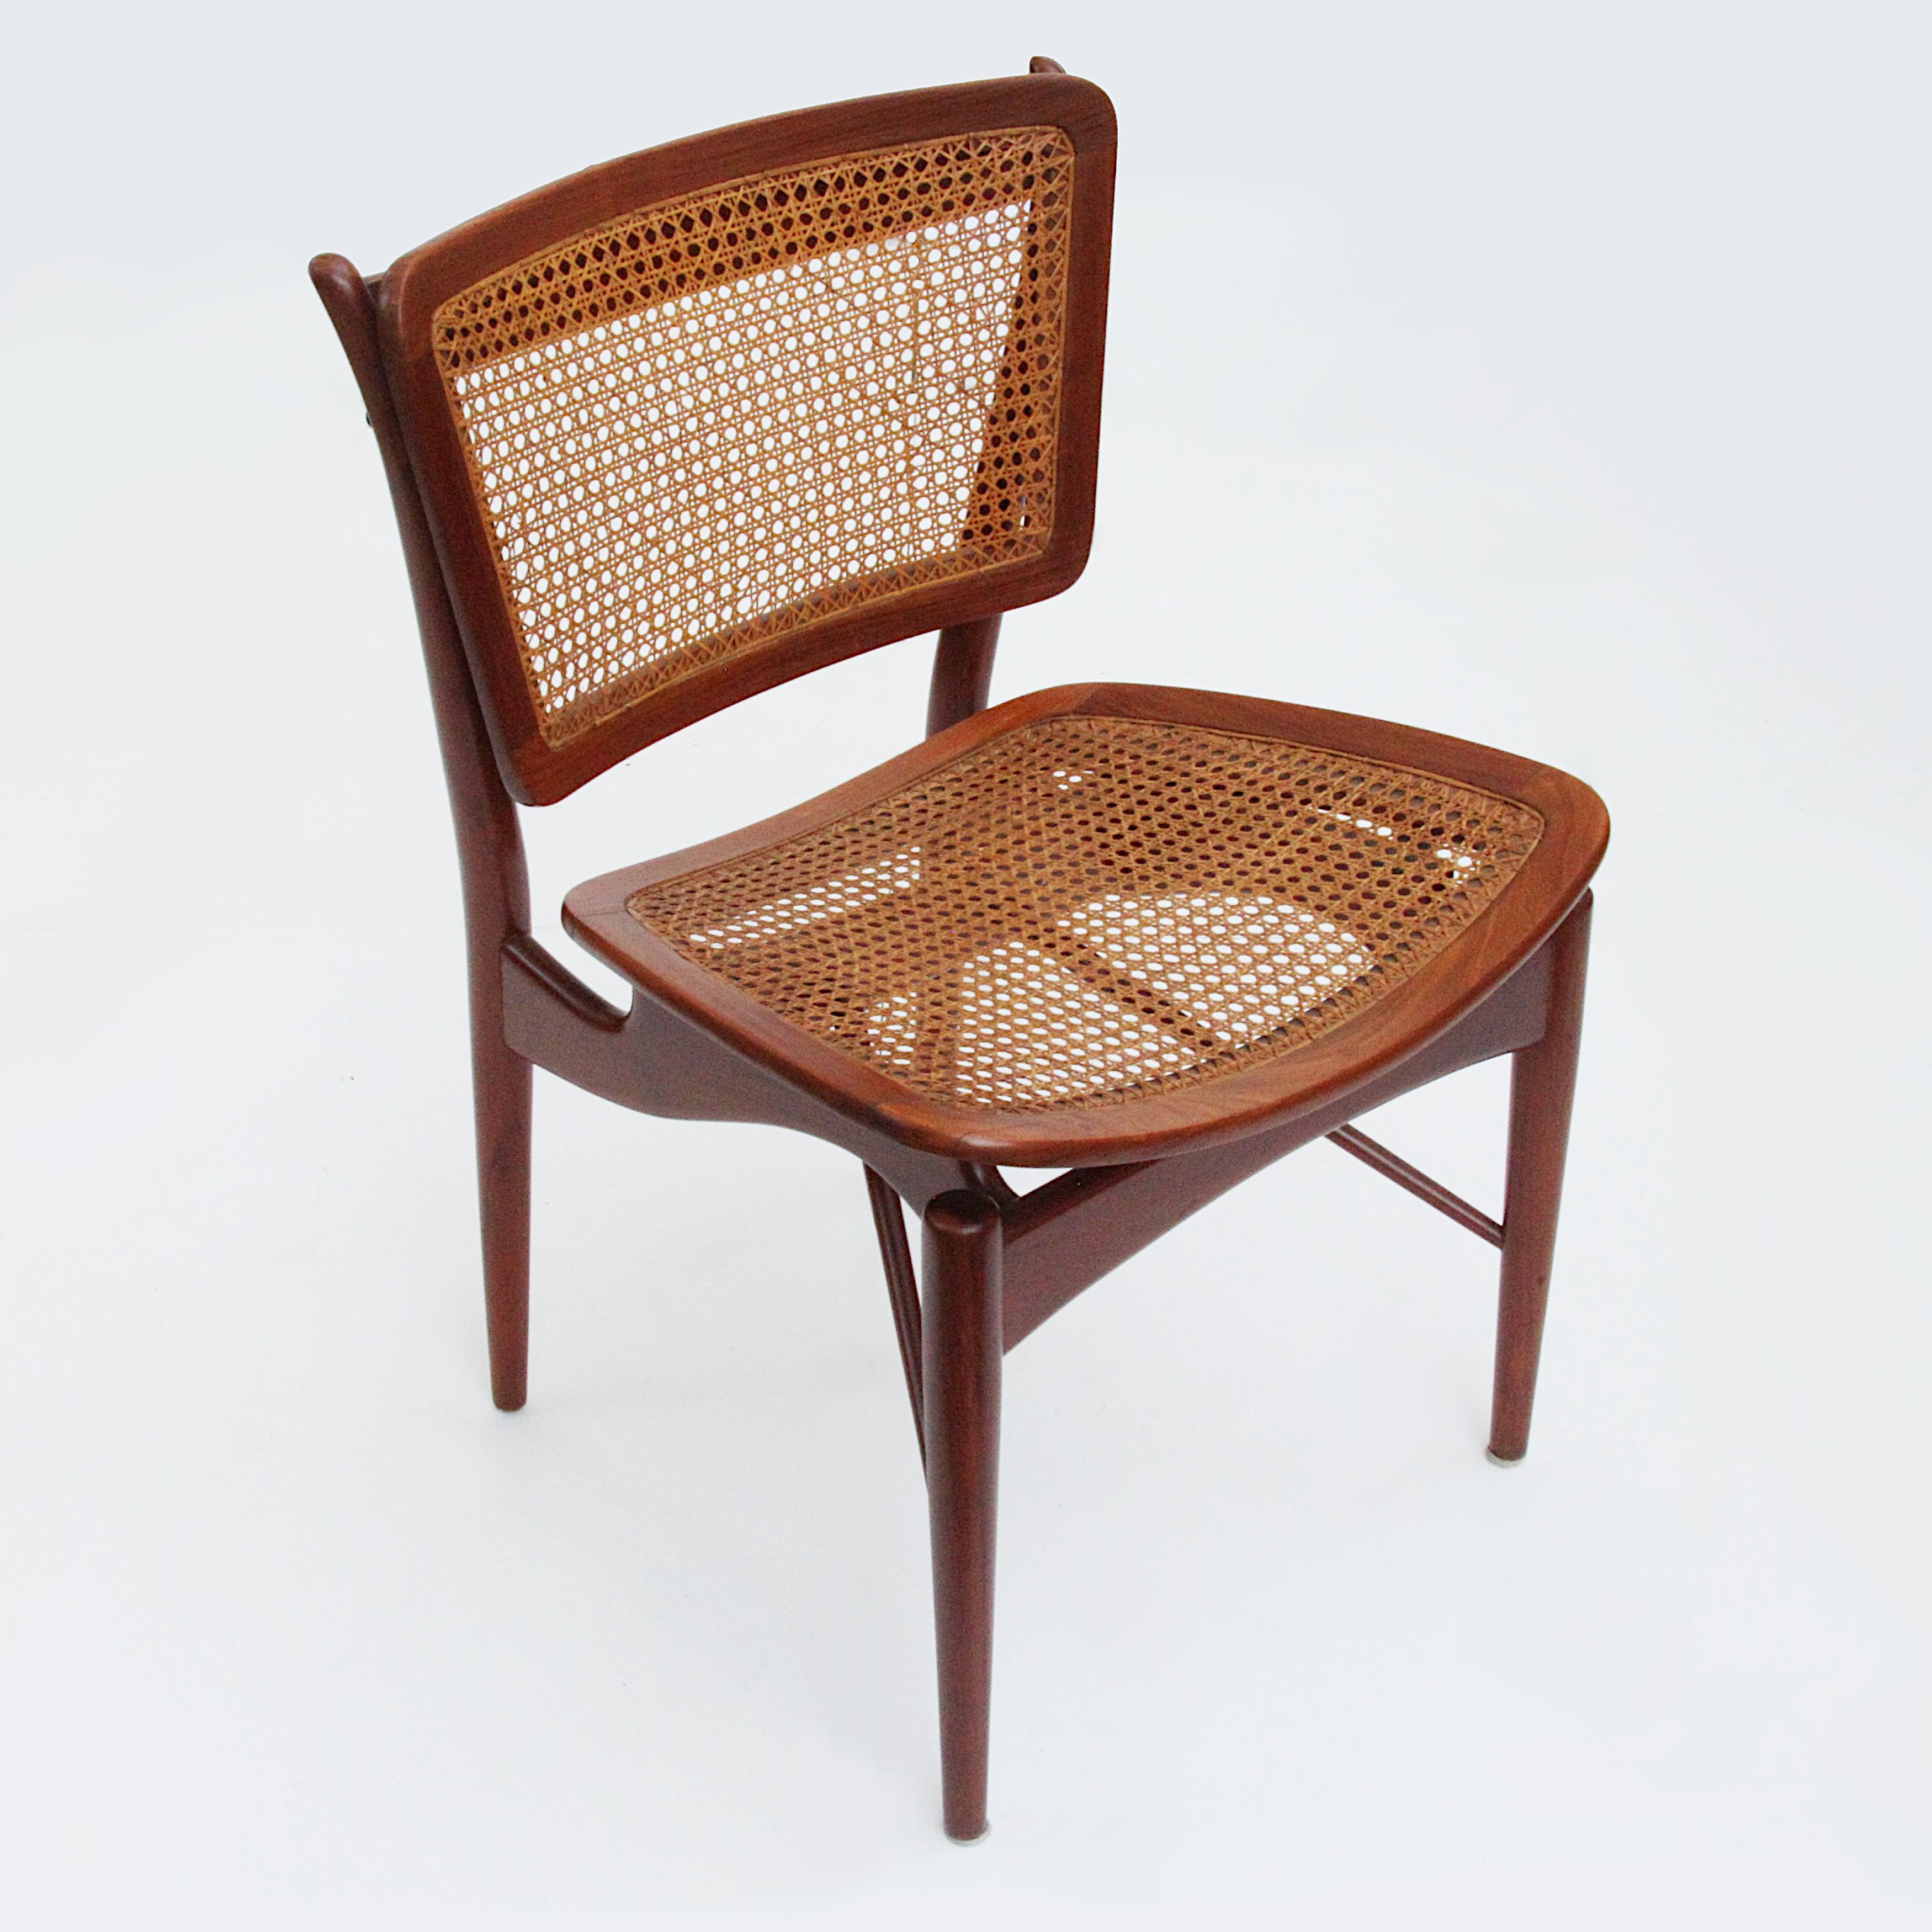 American Set of 4 Original Finn Juhl Model NV 51/403 Teak & Cane Dining Chairs by Baker